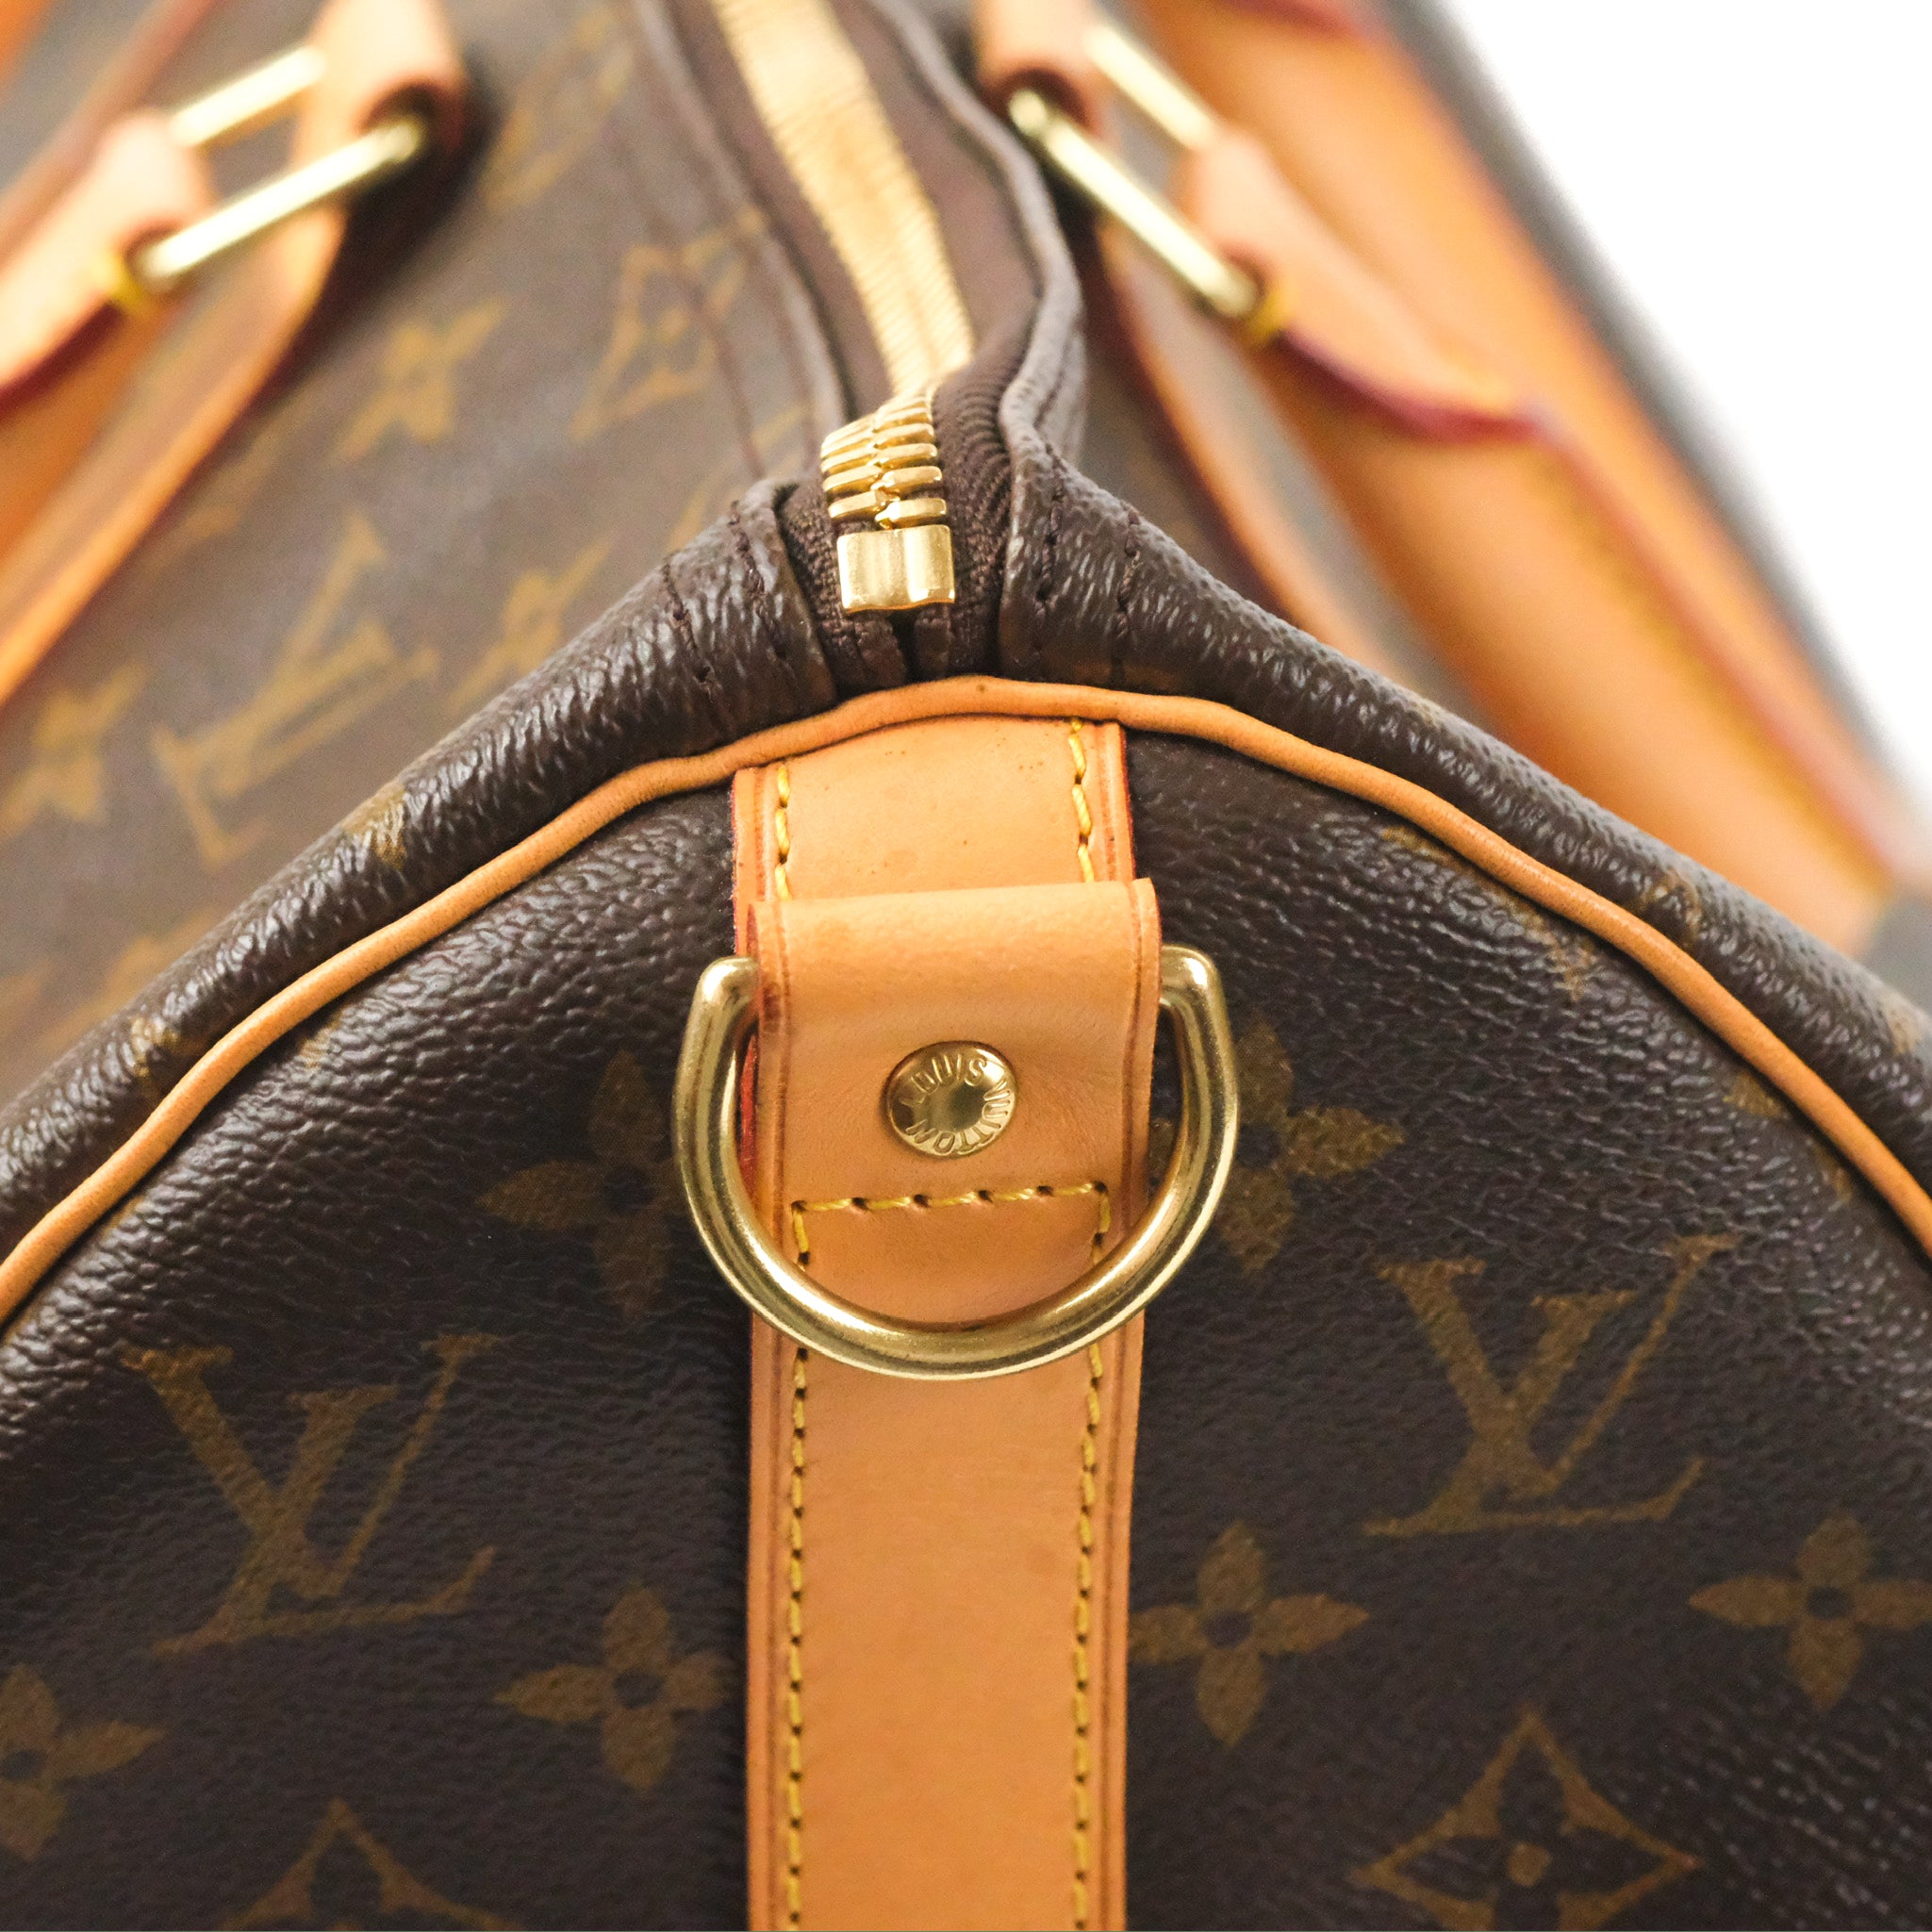 Sold at Auction: Louis Vuitton - a vintage Monogram zipped travel